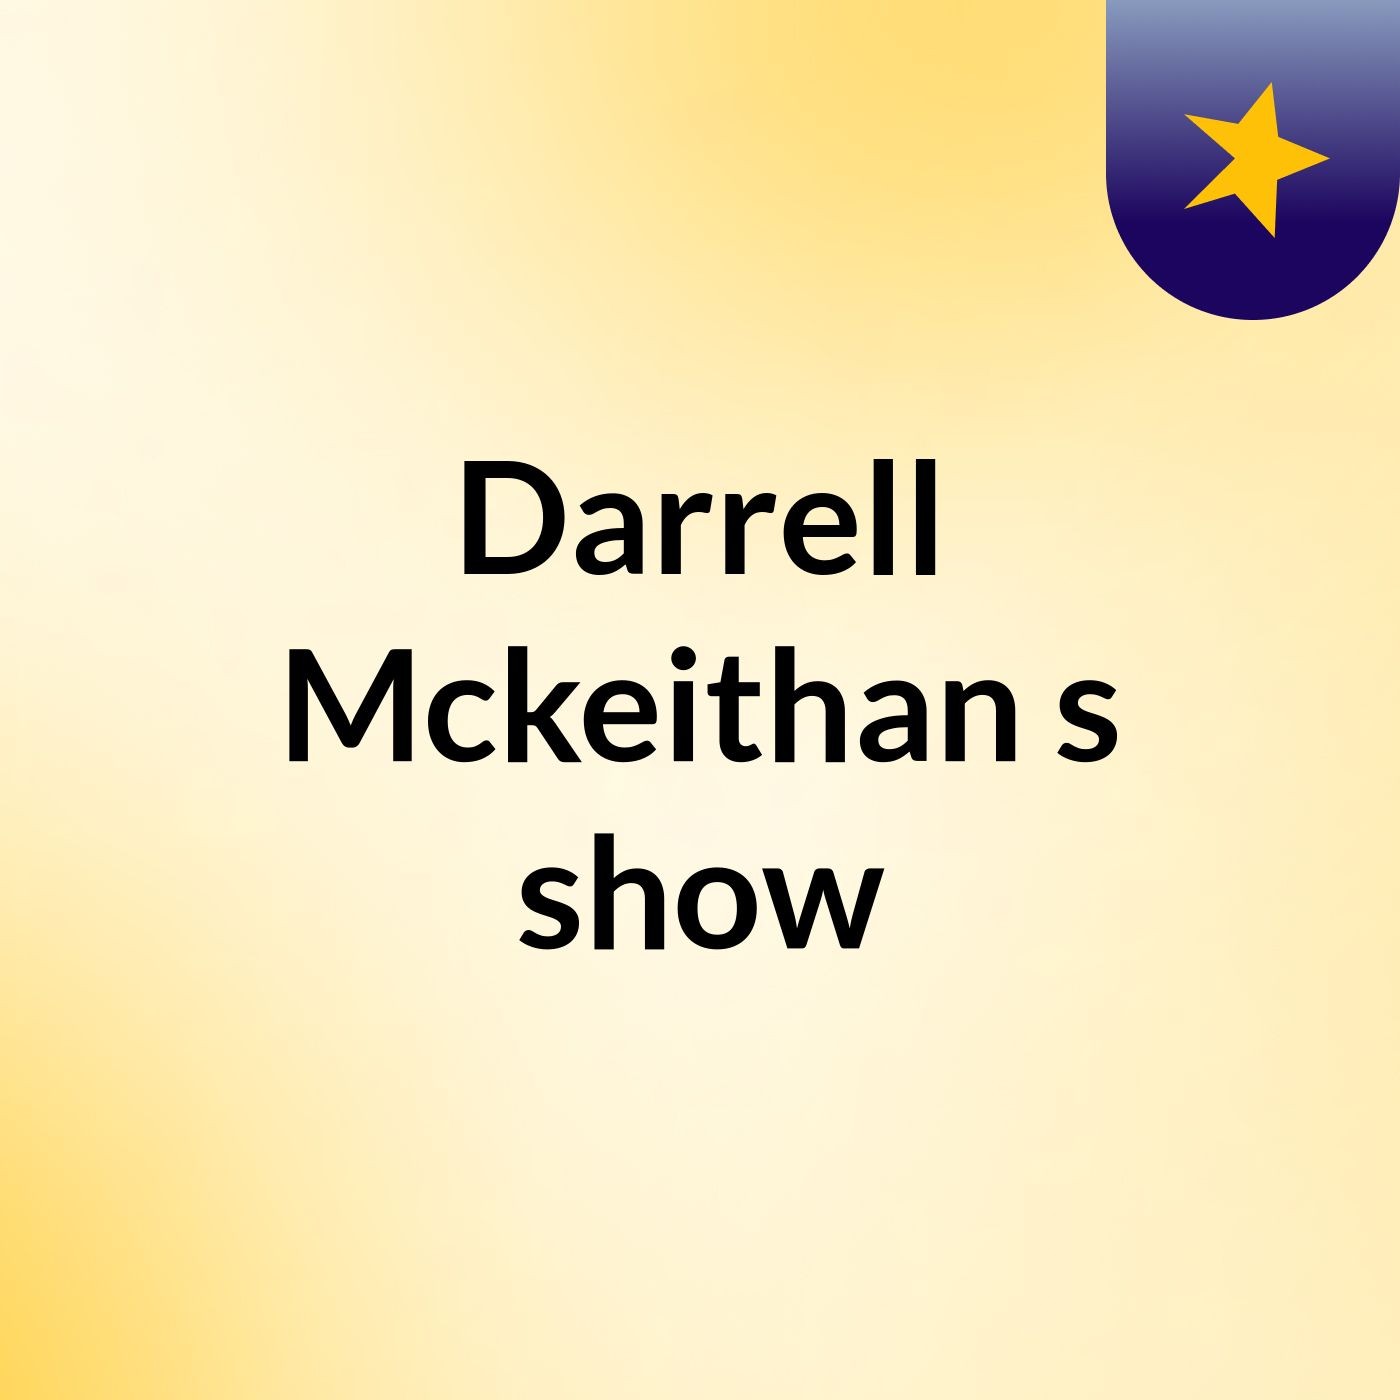 Darrell Mckeithan's show